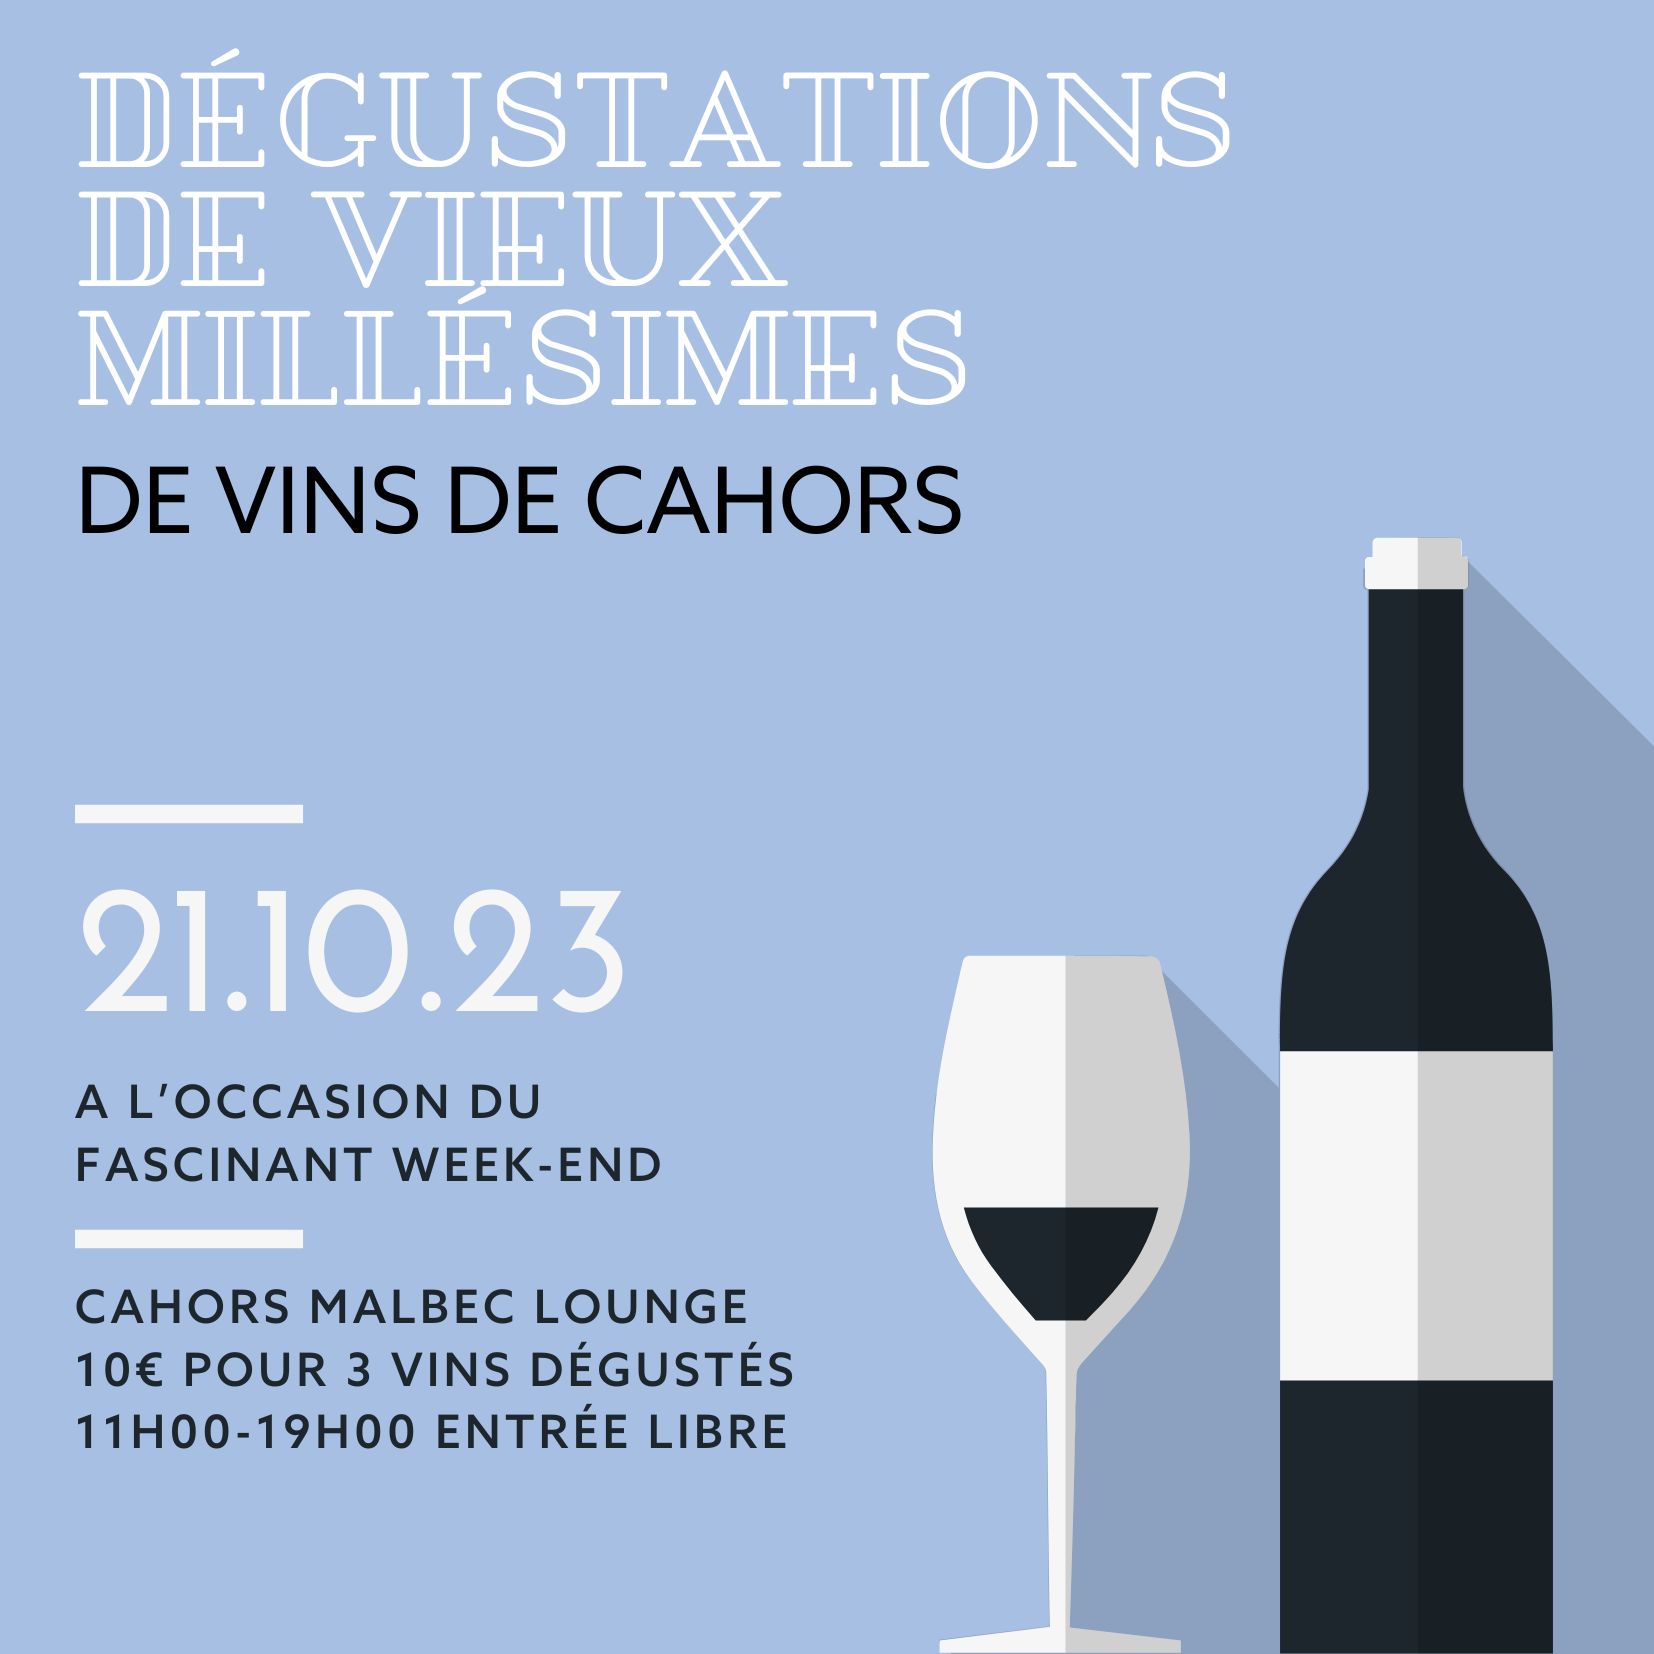 Dégustation de vieux millésimes de vin de Cahors null France null null null null